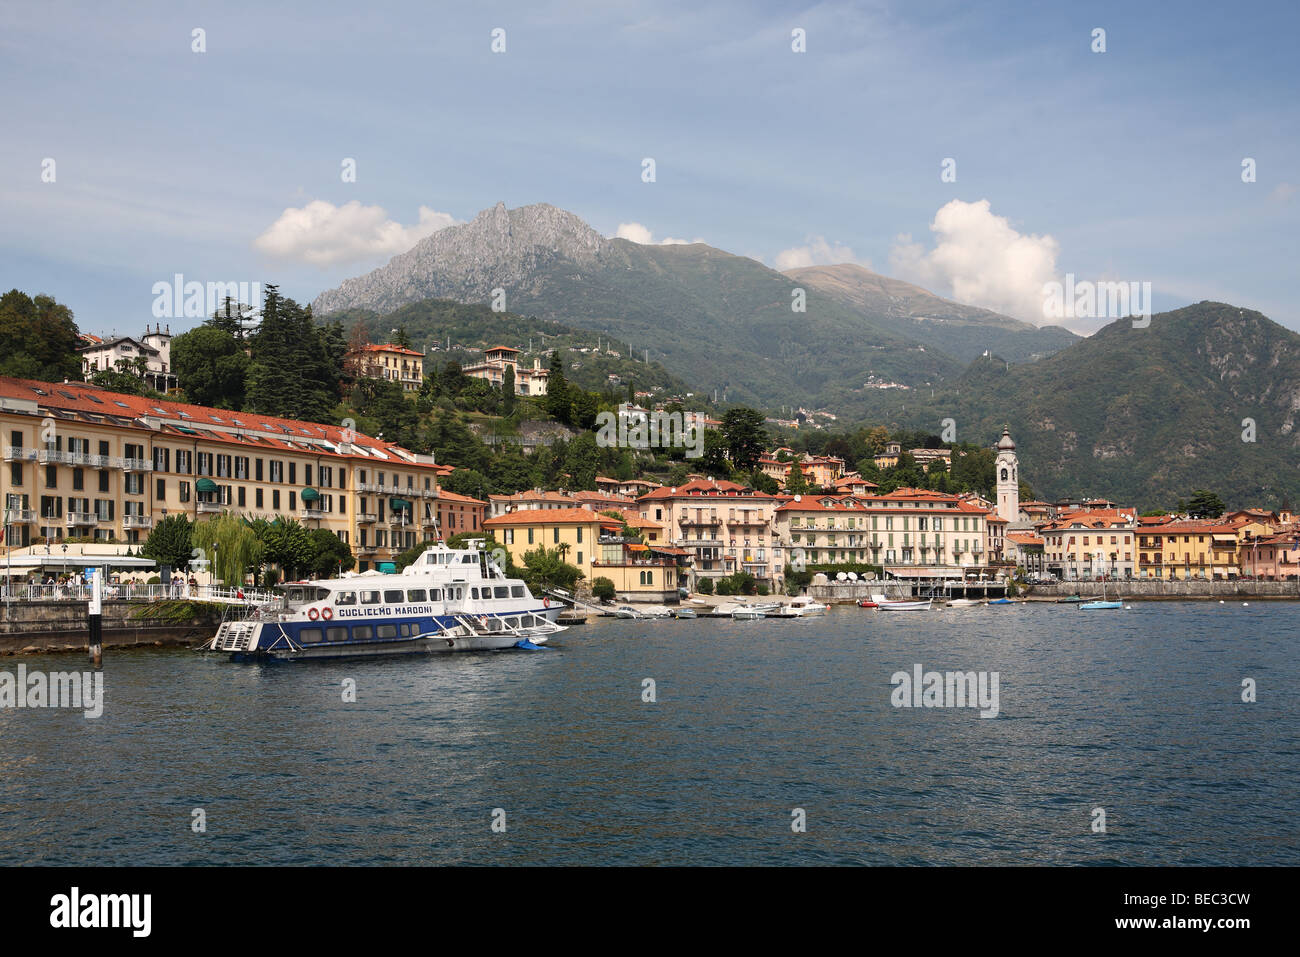 The lake Como fast ferry Guglielmo Marconi moored at the lakeside resort of Menaggio, Italy, Europe Stock Photo